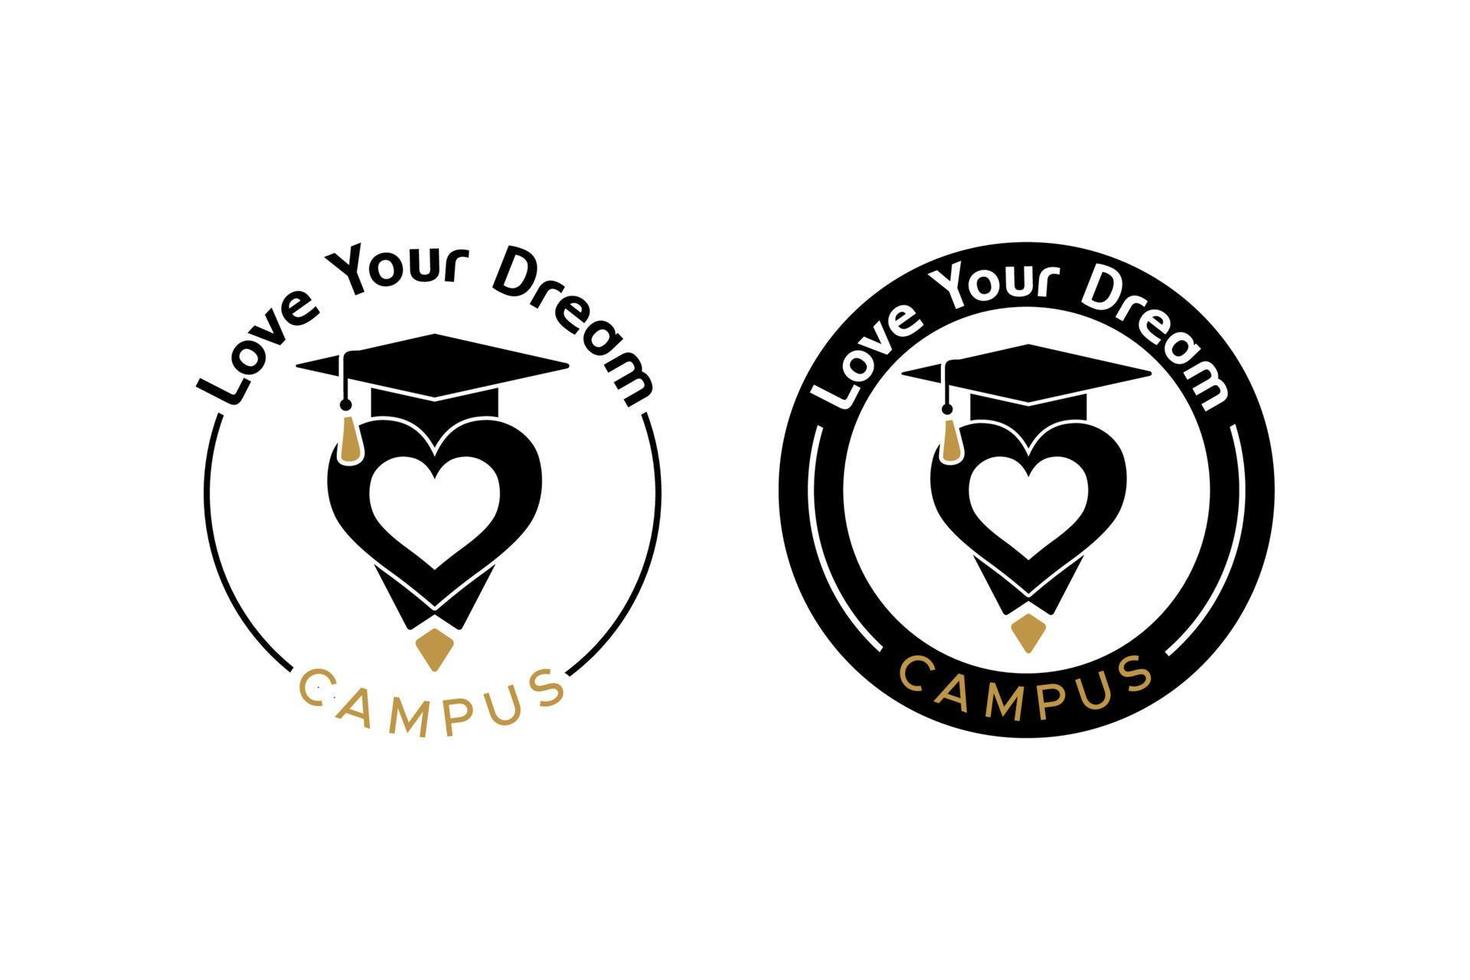 Graduate Toga Hat Pencil Love Heart for Education University Academic Campus logo vector